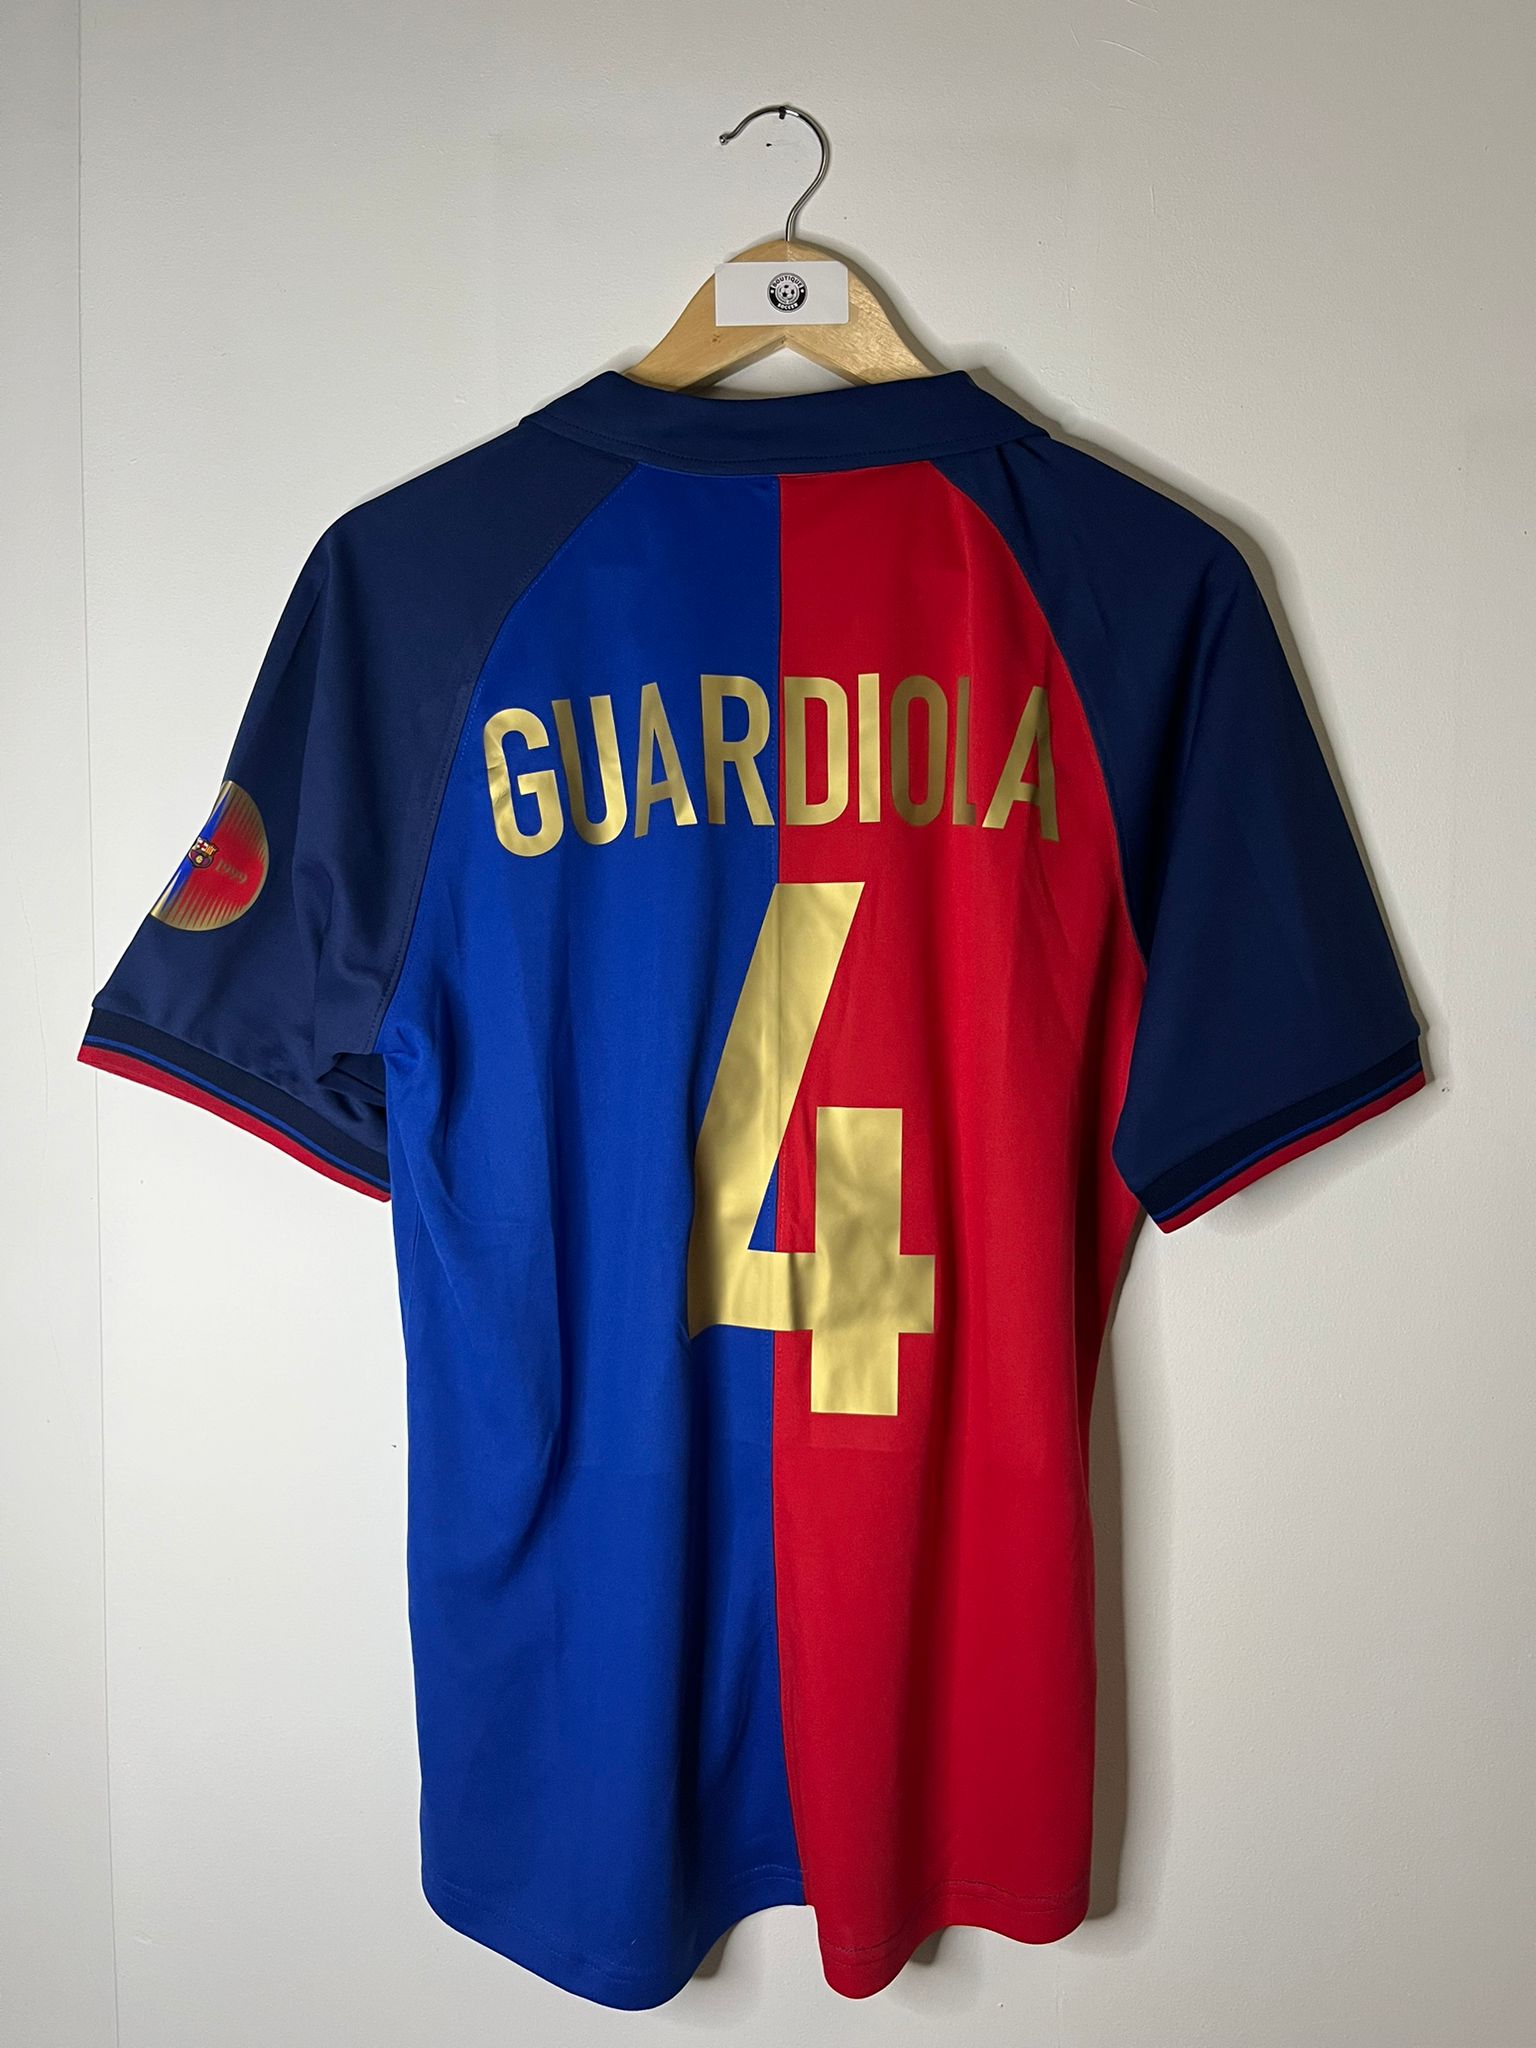 Guardiola kit